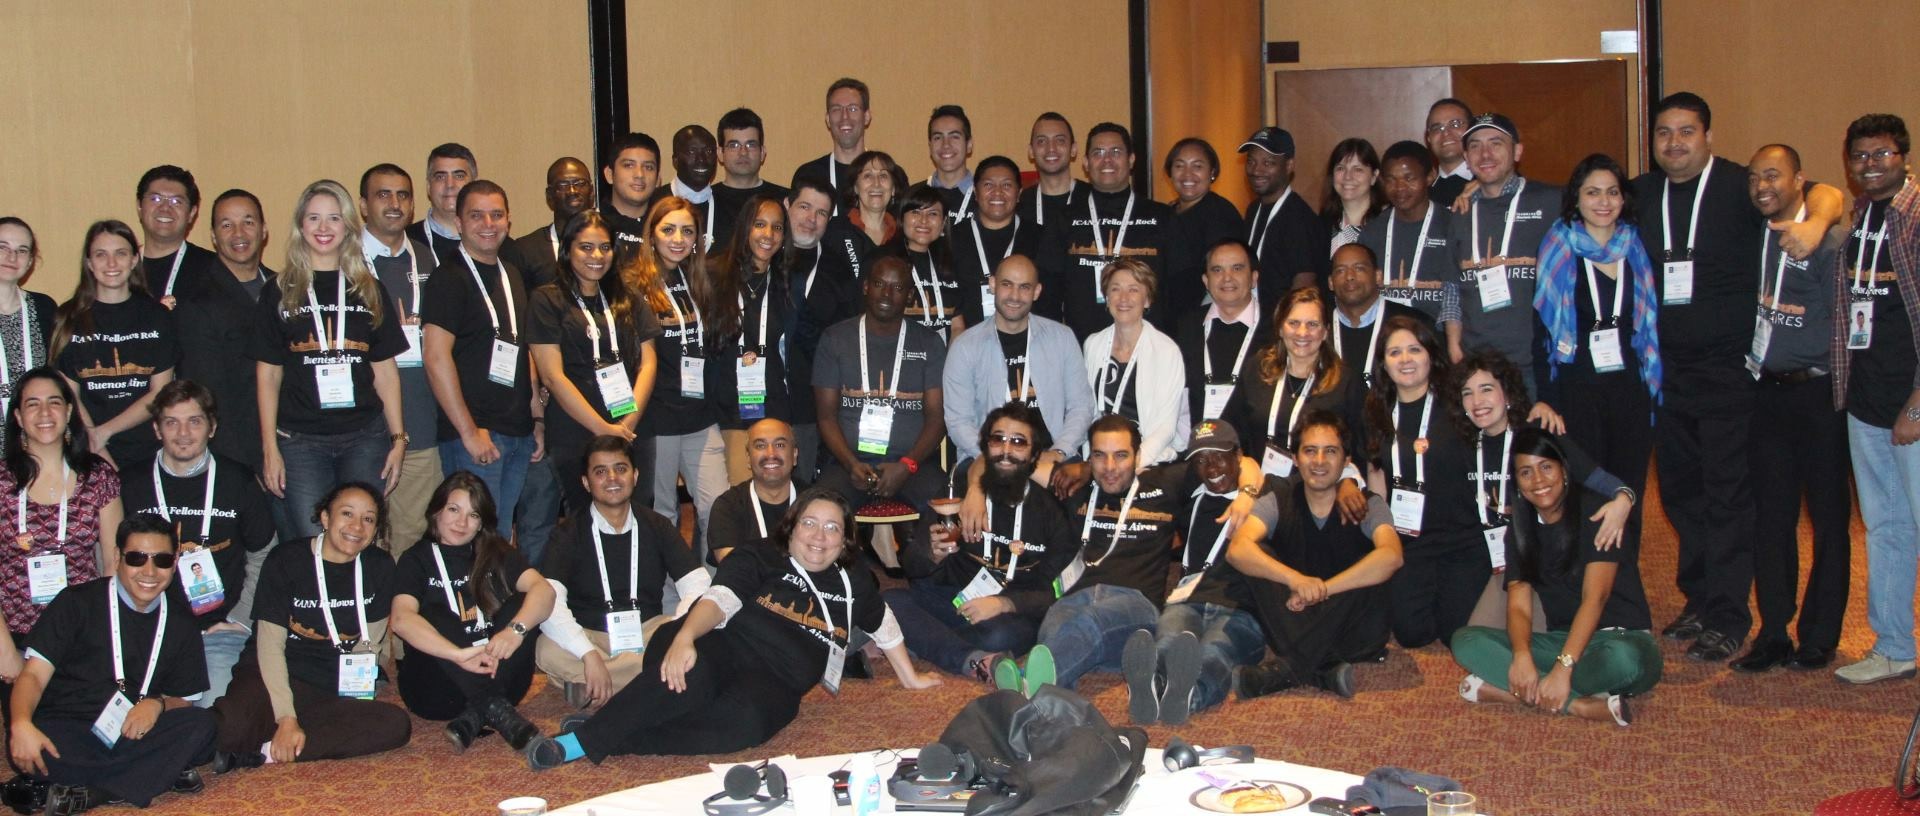 Singapore Fellowship Participants gather at ICANN52